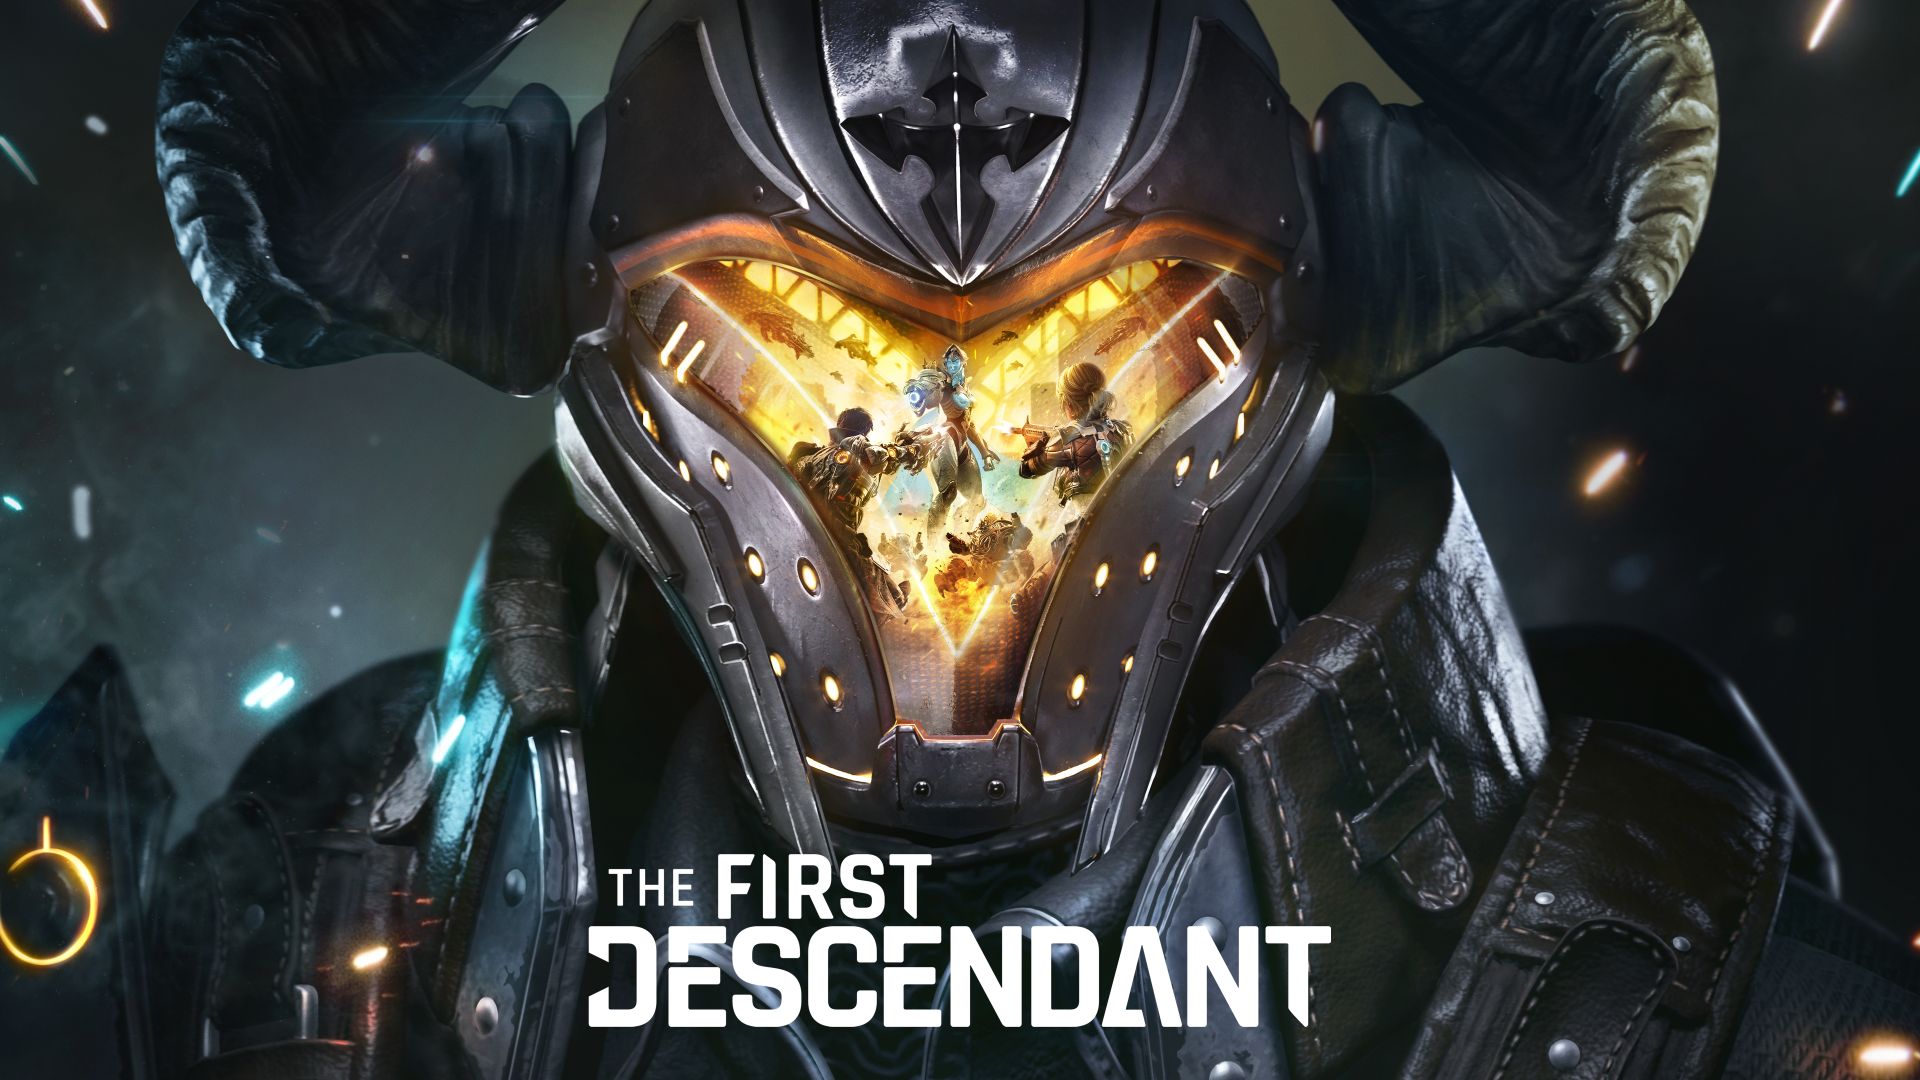 Get Sneak Peek at The First Descendant's Compelling Heroes Ahead